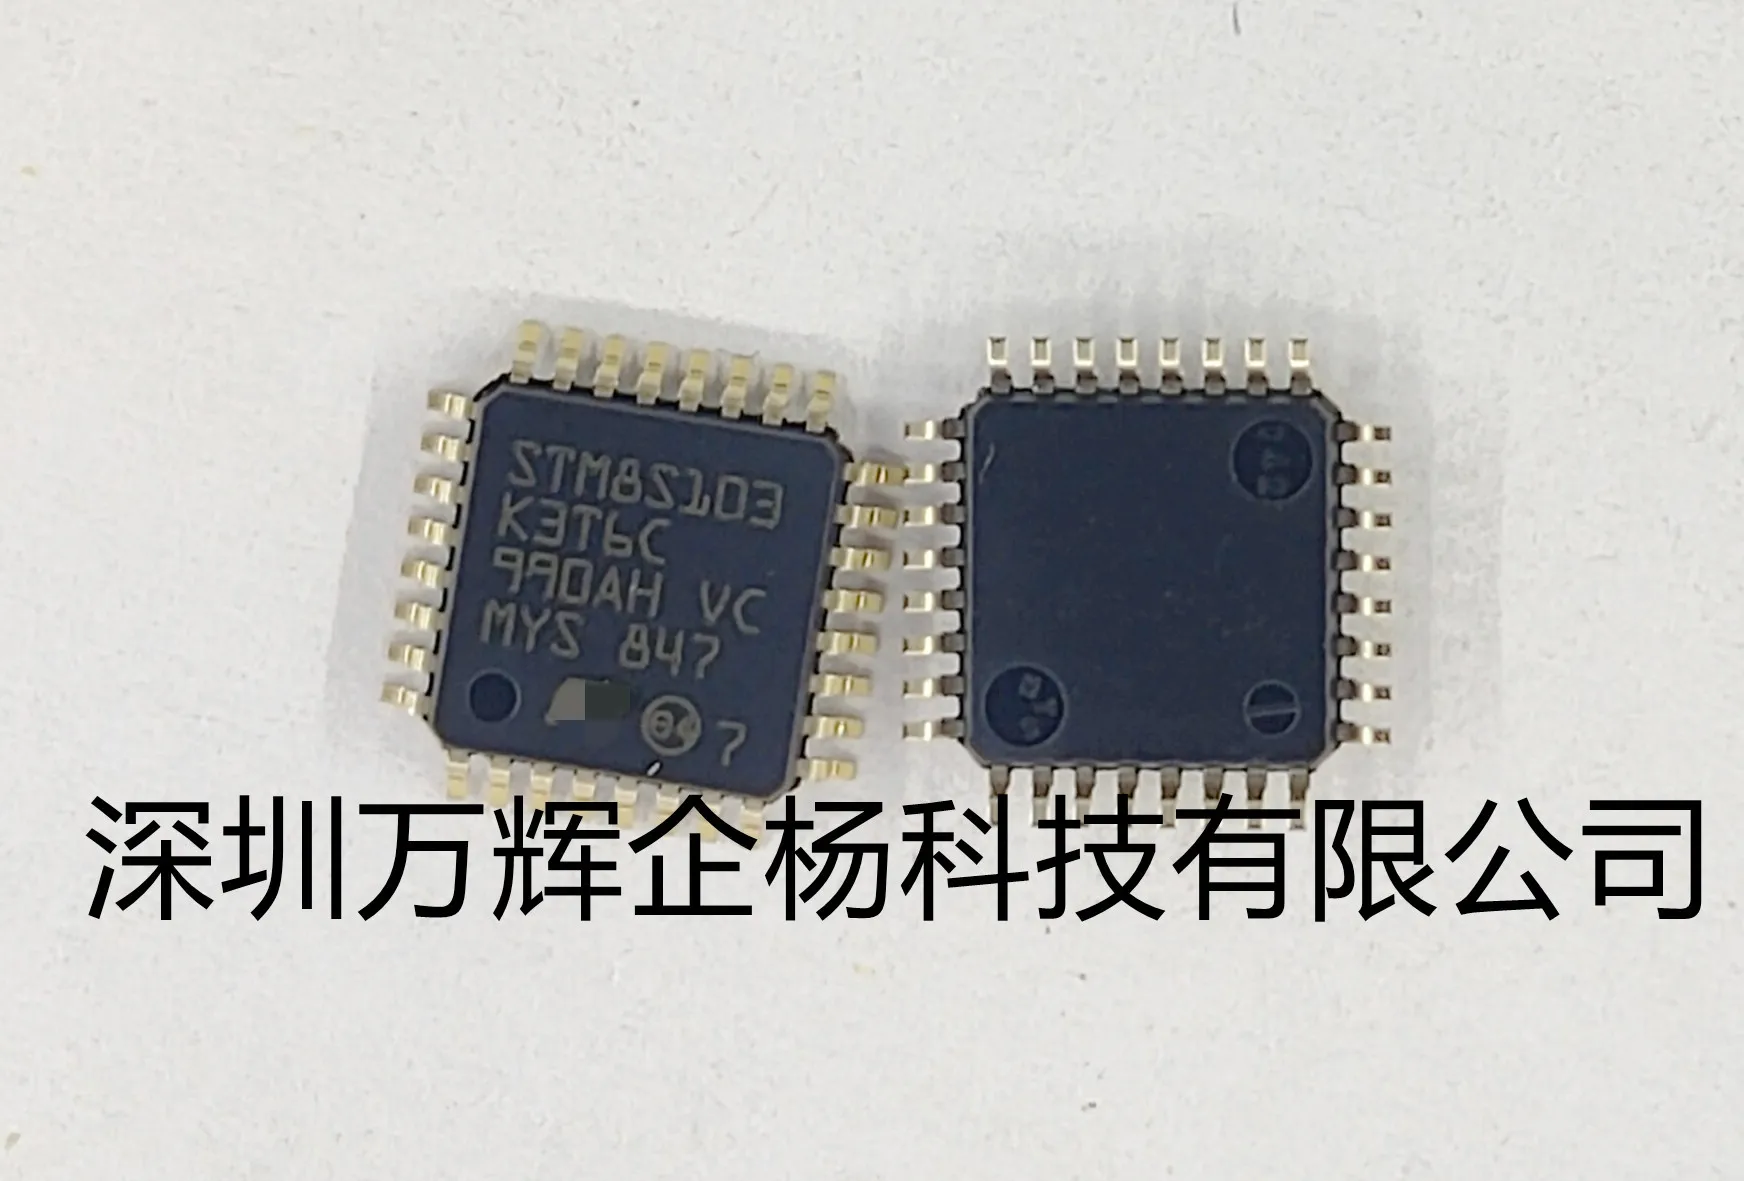 10buc~50Pcs Original STM8S103 STM8S103K3T6C LQFP32 single-chip microcompu embedded microcontroller cip Imagine 0